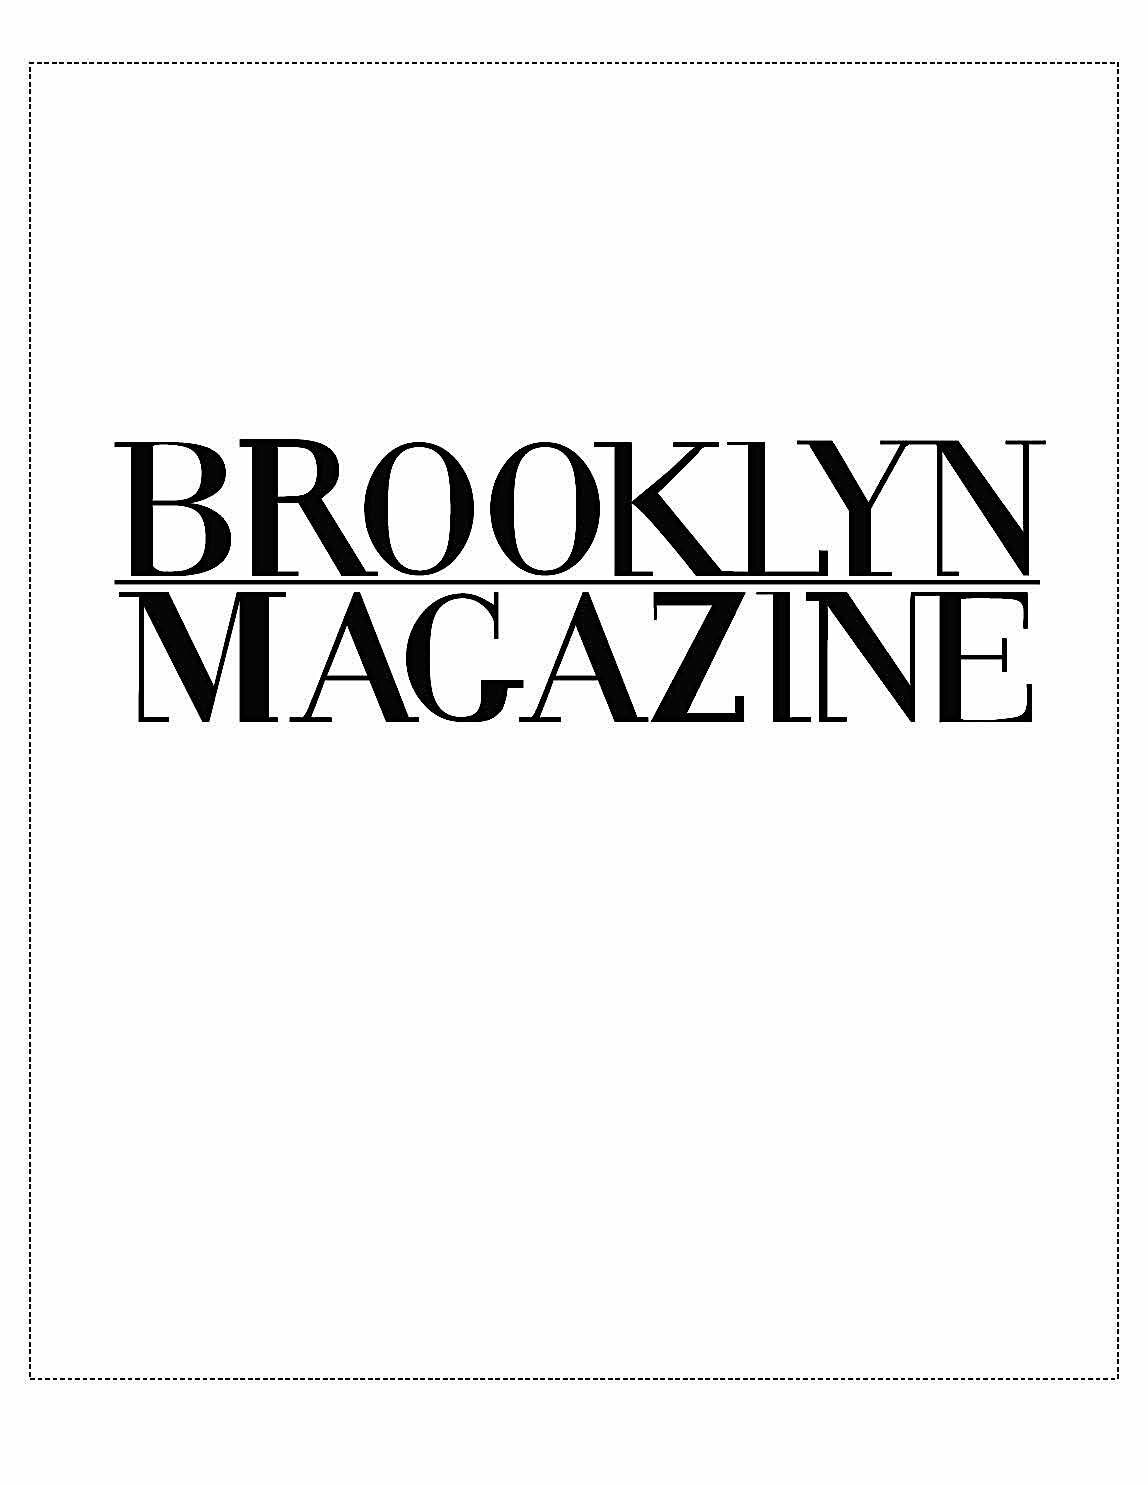 Brooklyn Magazine_Page_1.jpg